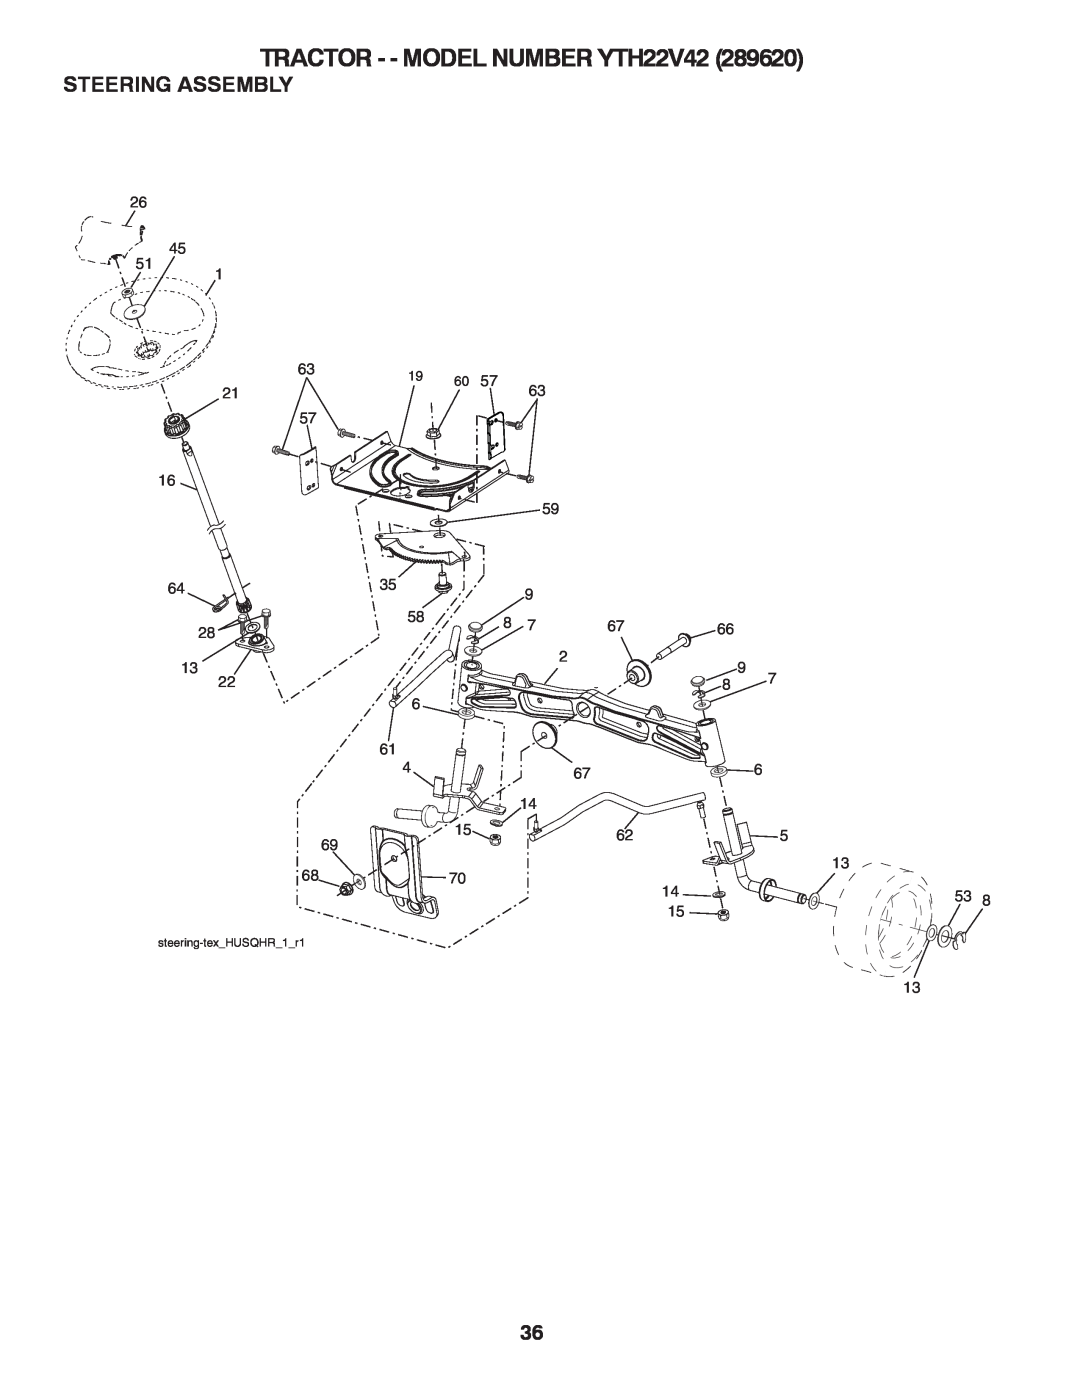 Husqvarna owner manual Steering Assembly, TRACTOR - - MODEL NUMBER YTH22V42, steering-texHUSQHR1r1 